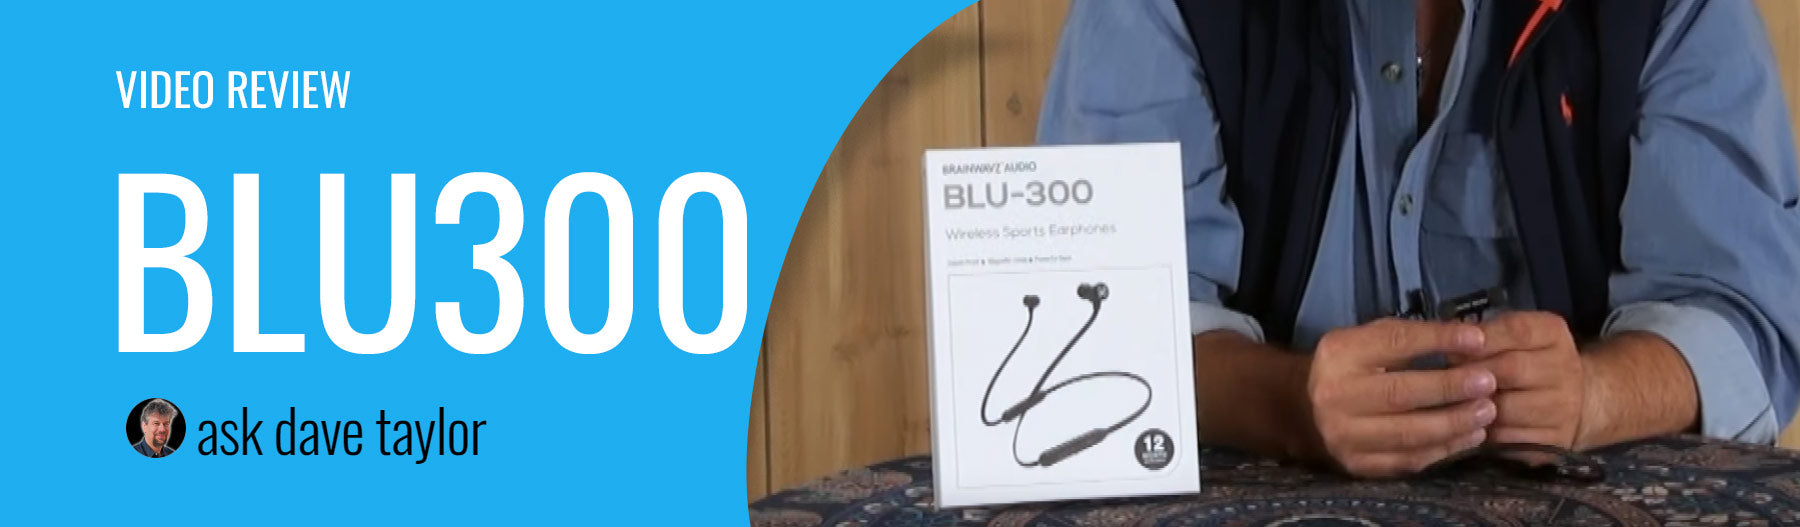 BLU-300 Video Review